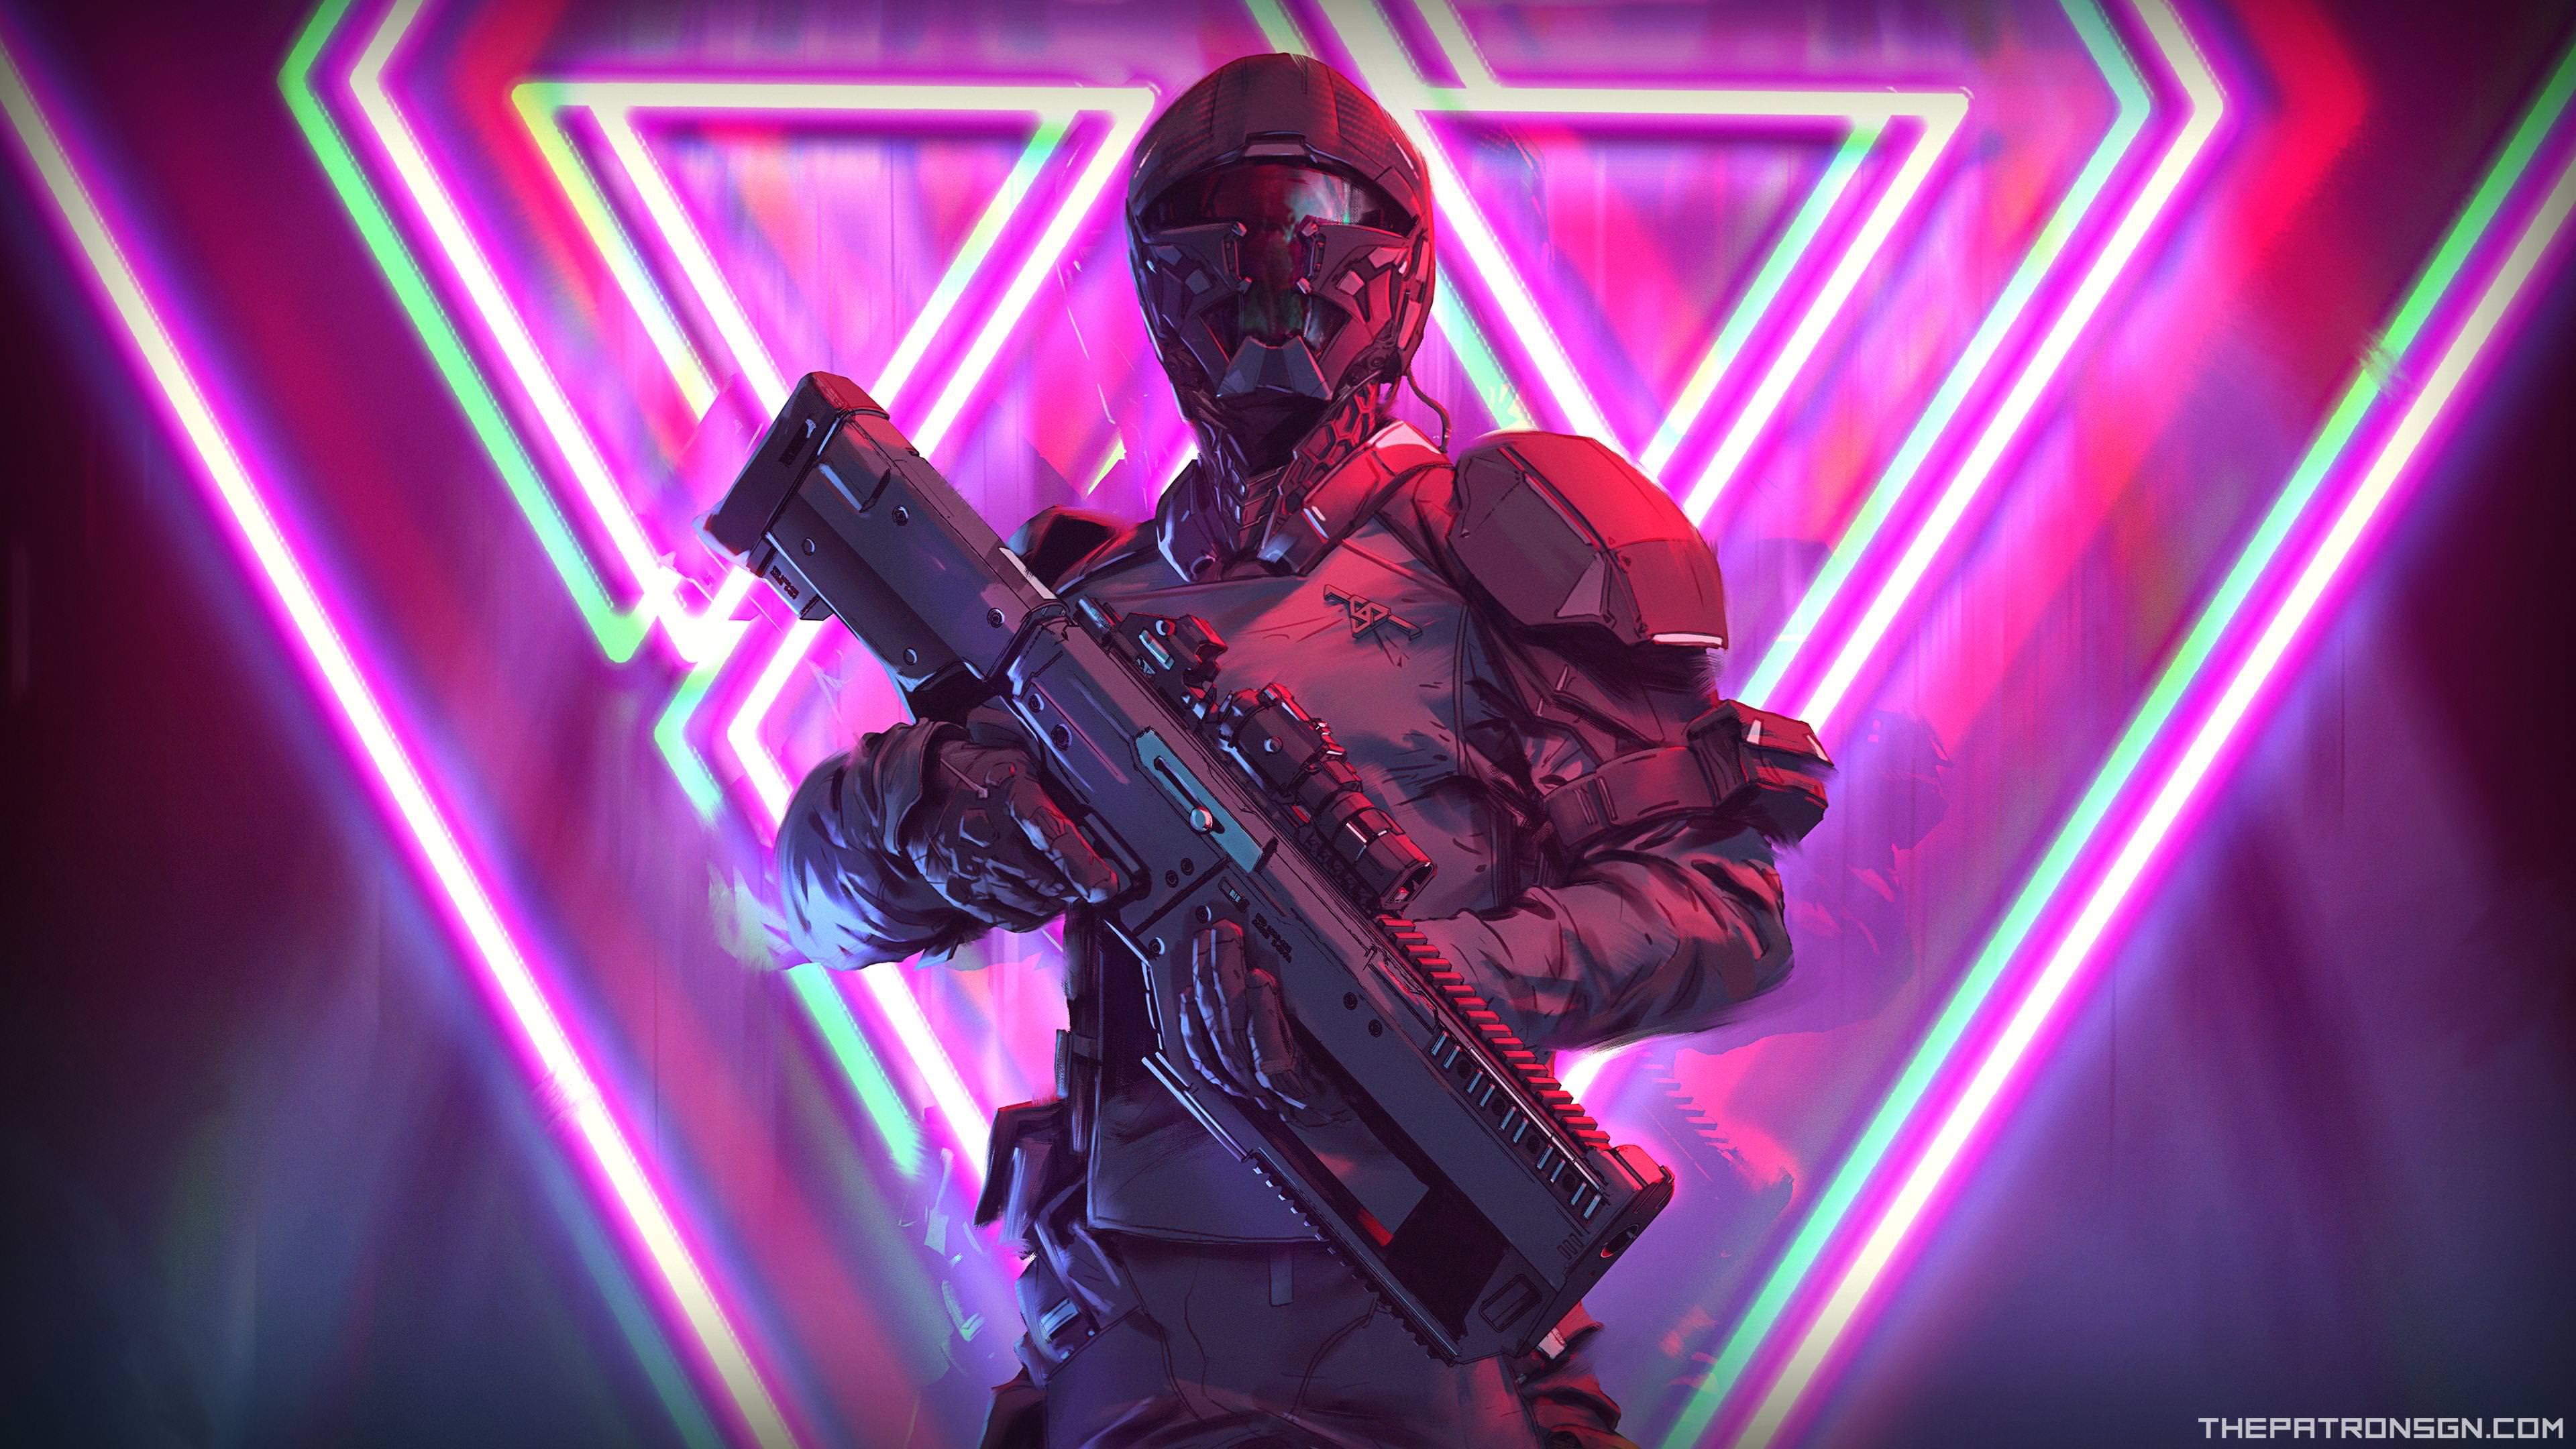 General 3840x2160 neon weapon soldier futuristic helmet science fiction gun men